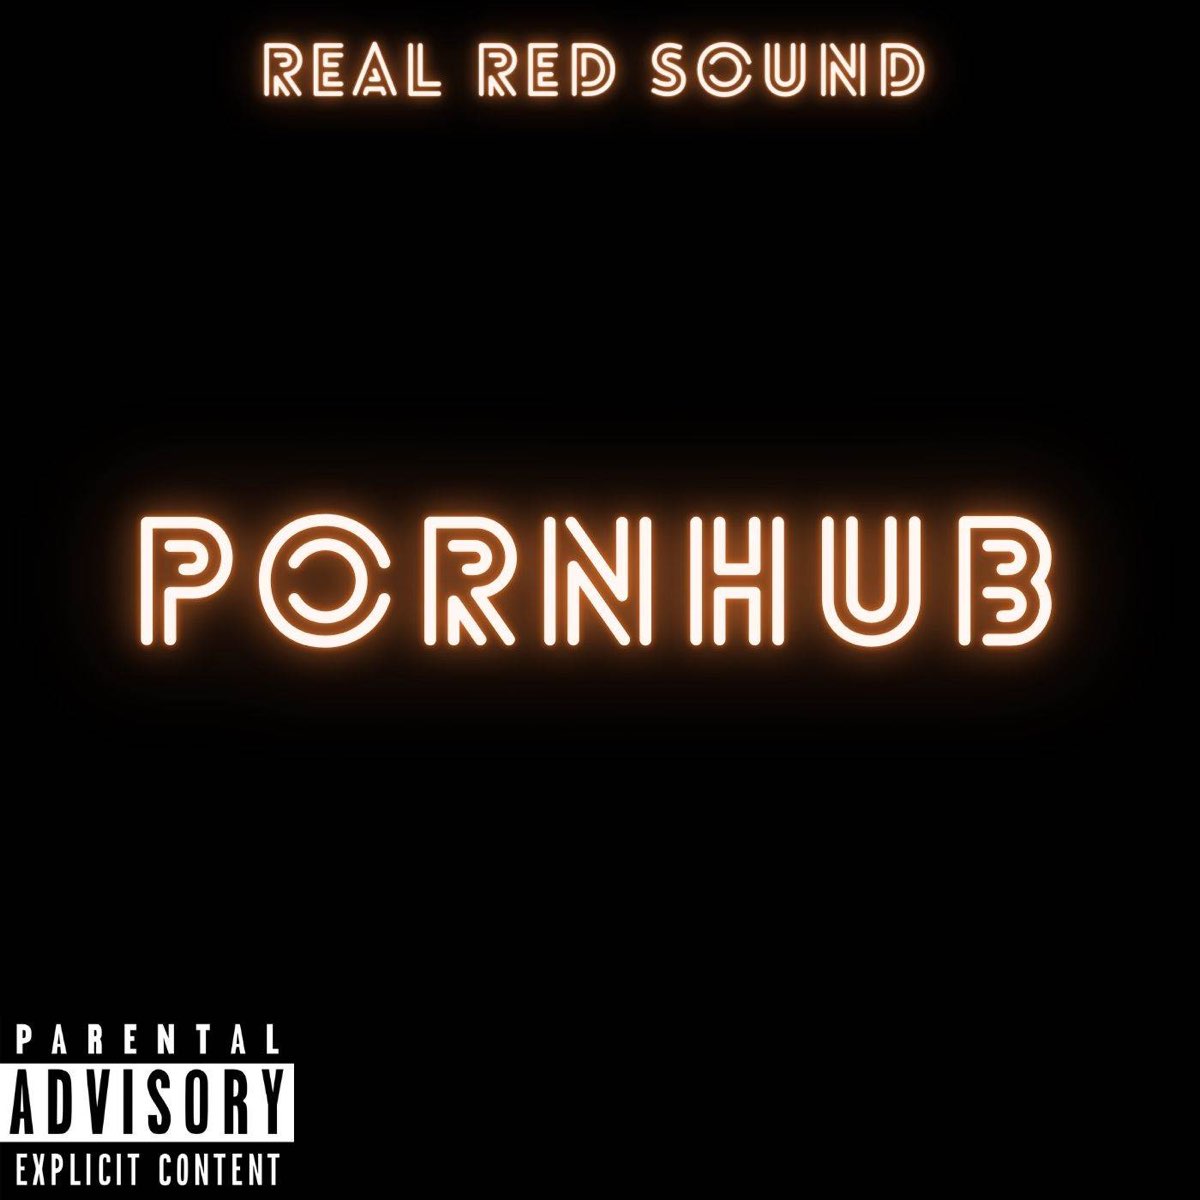 Pornhub Sound